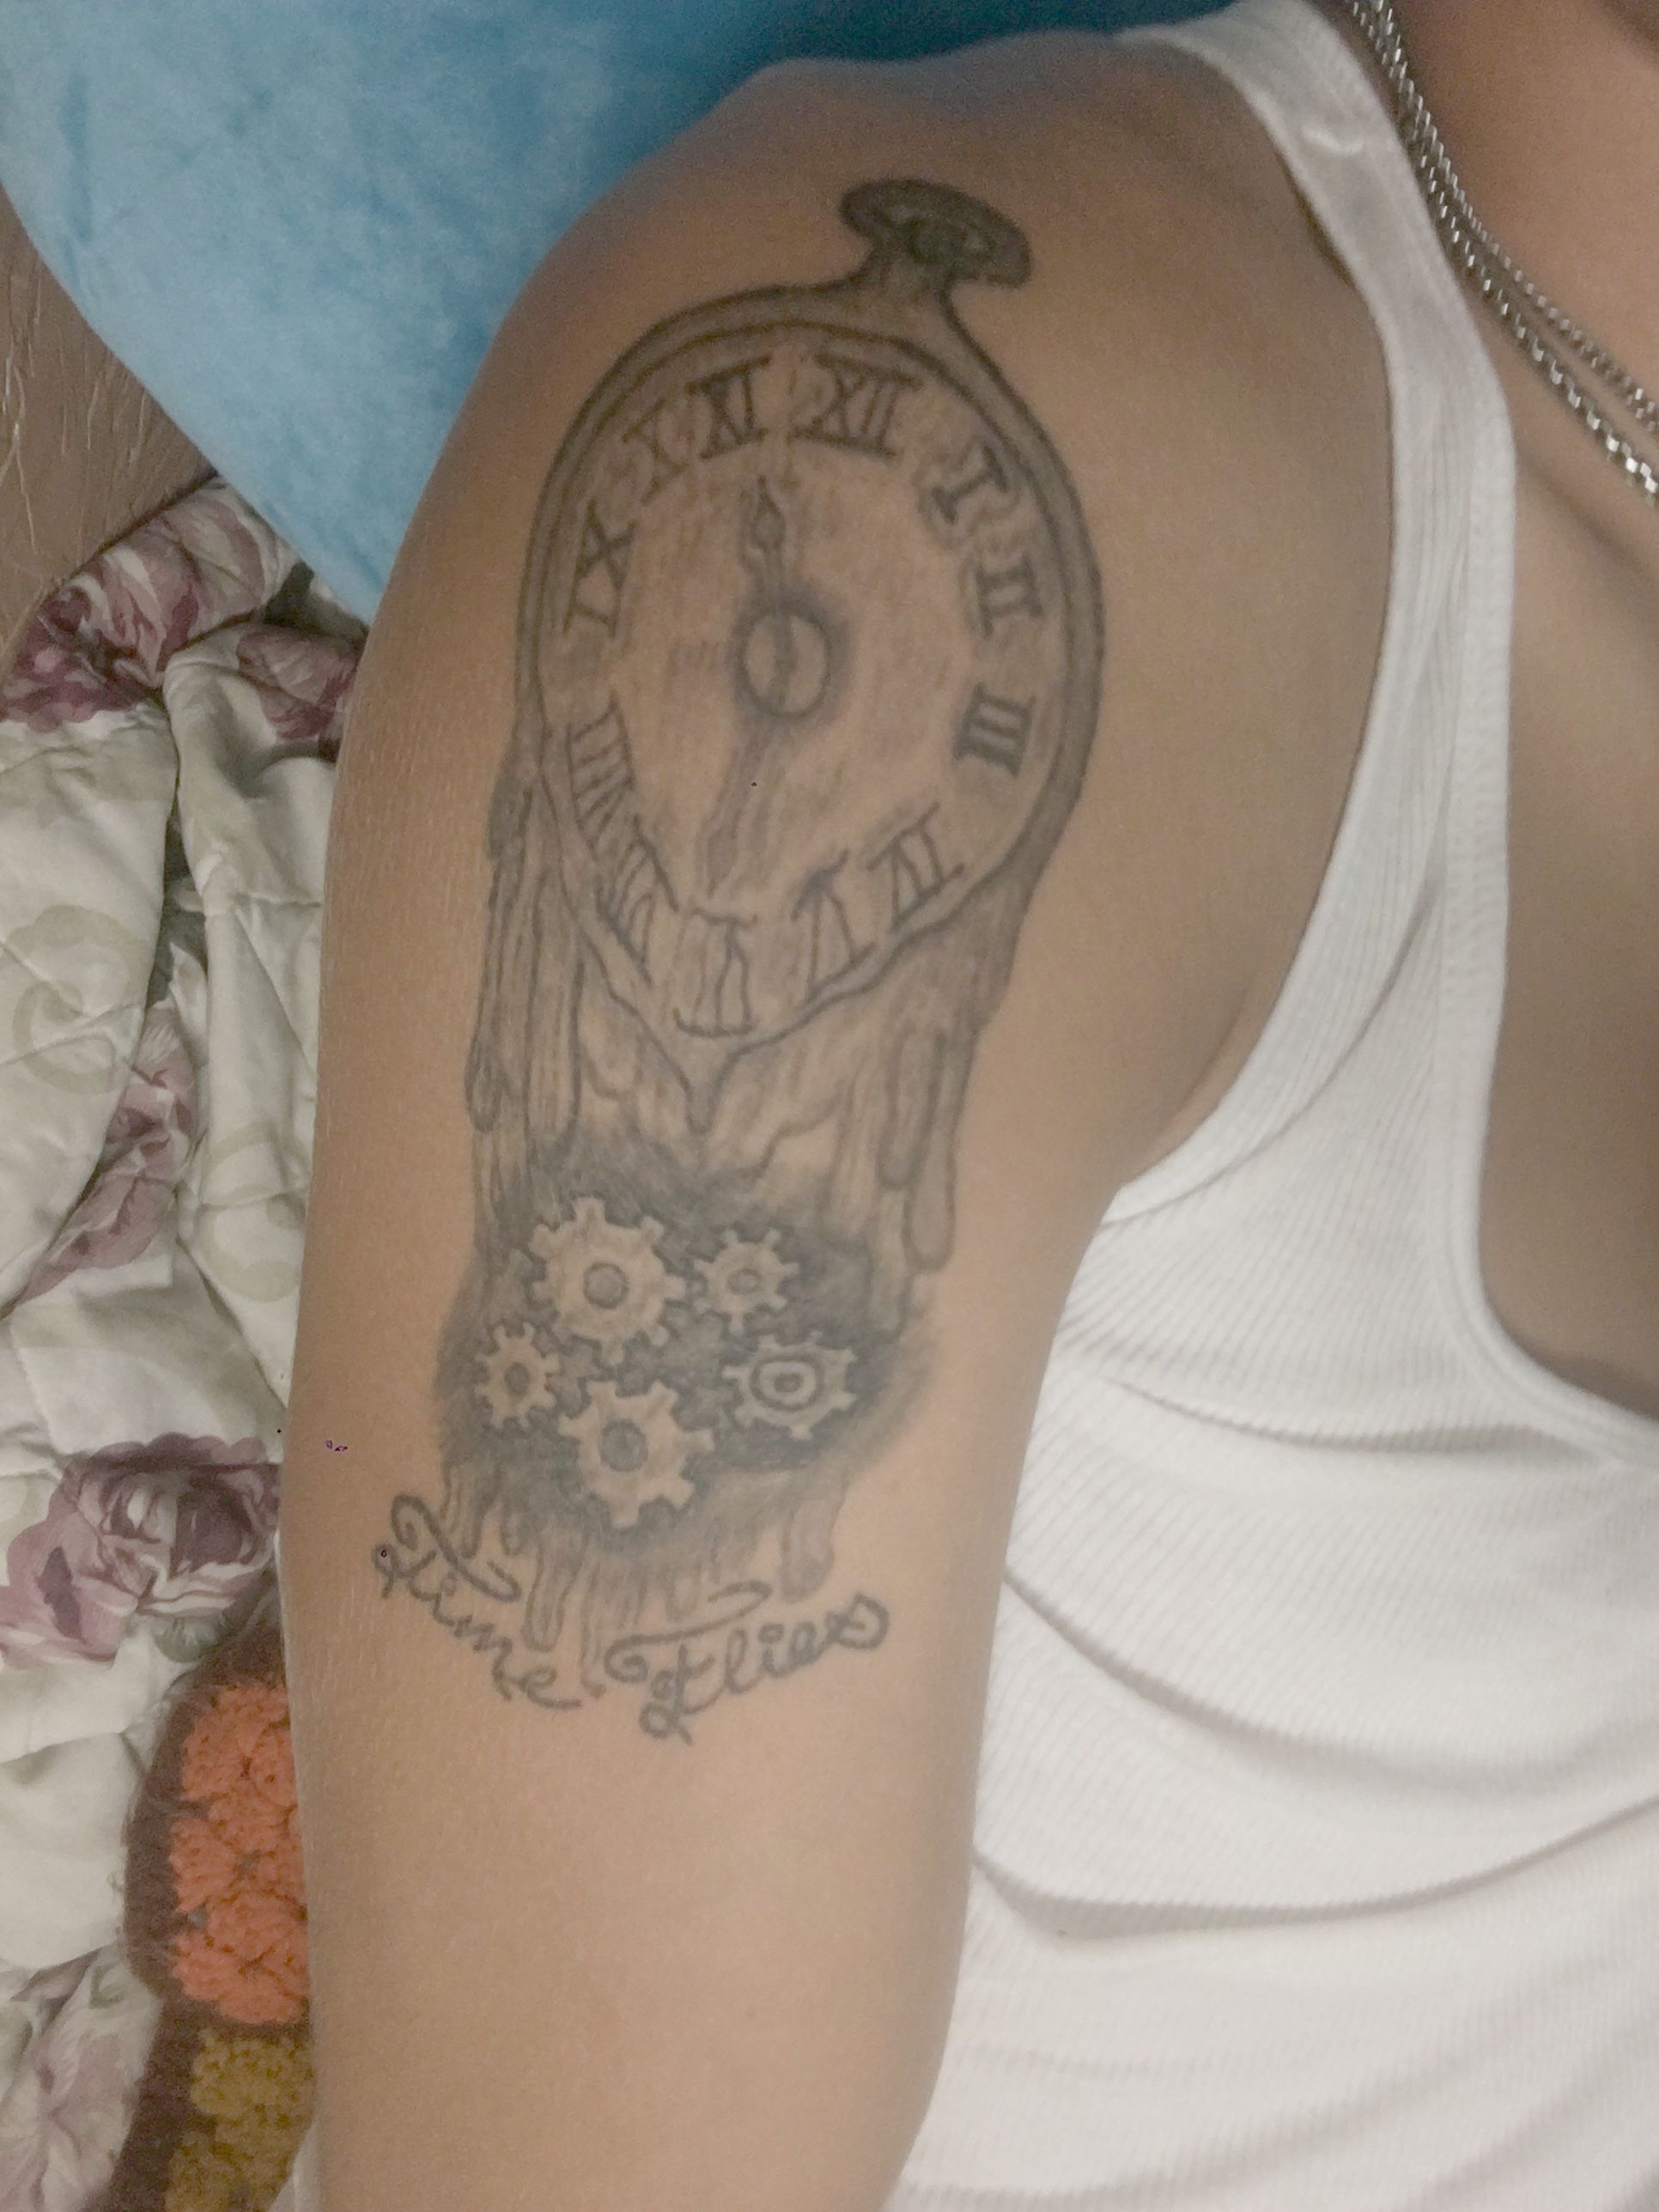 melting clock tattoo sleeve